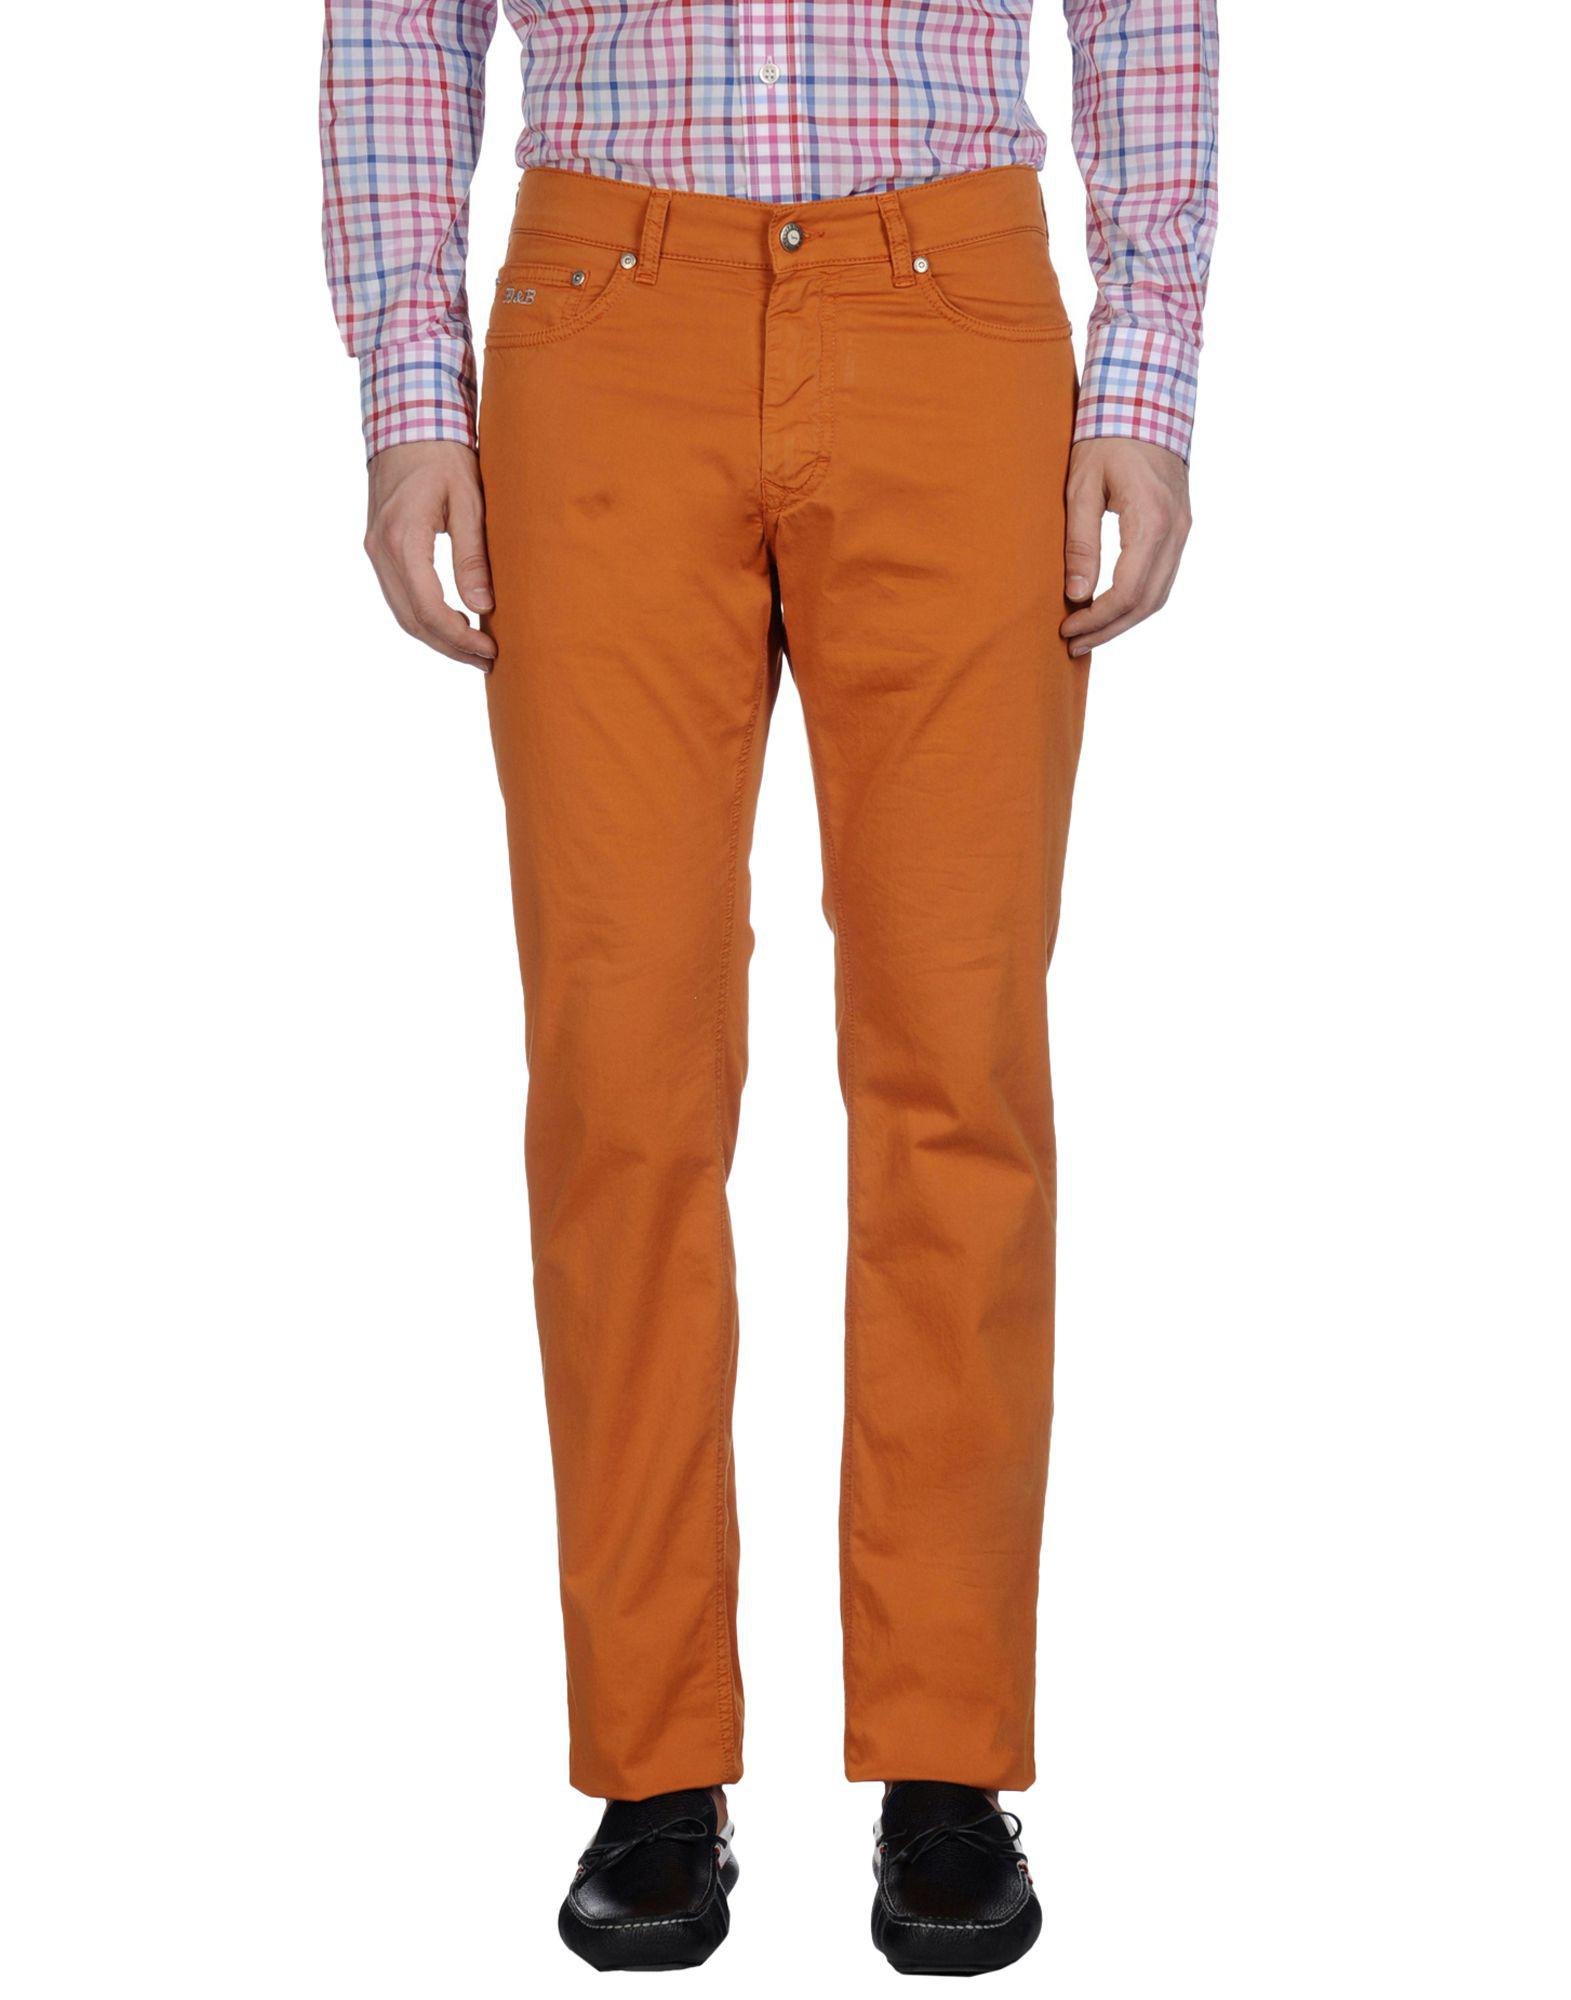 Lyst - Harmont & Blaine Casual Pants in Orange for Men